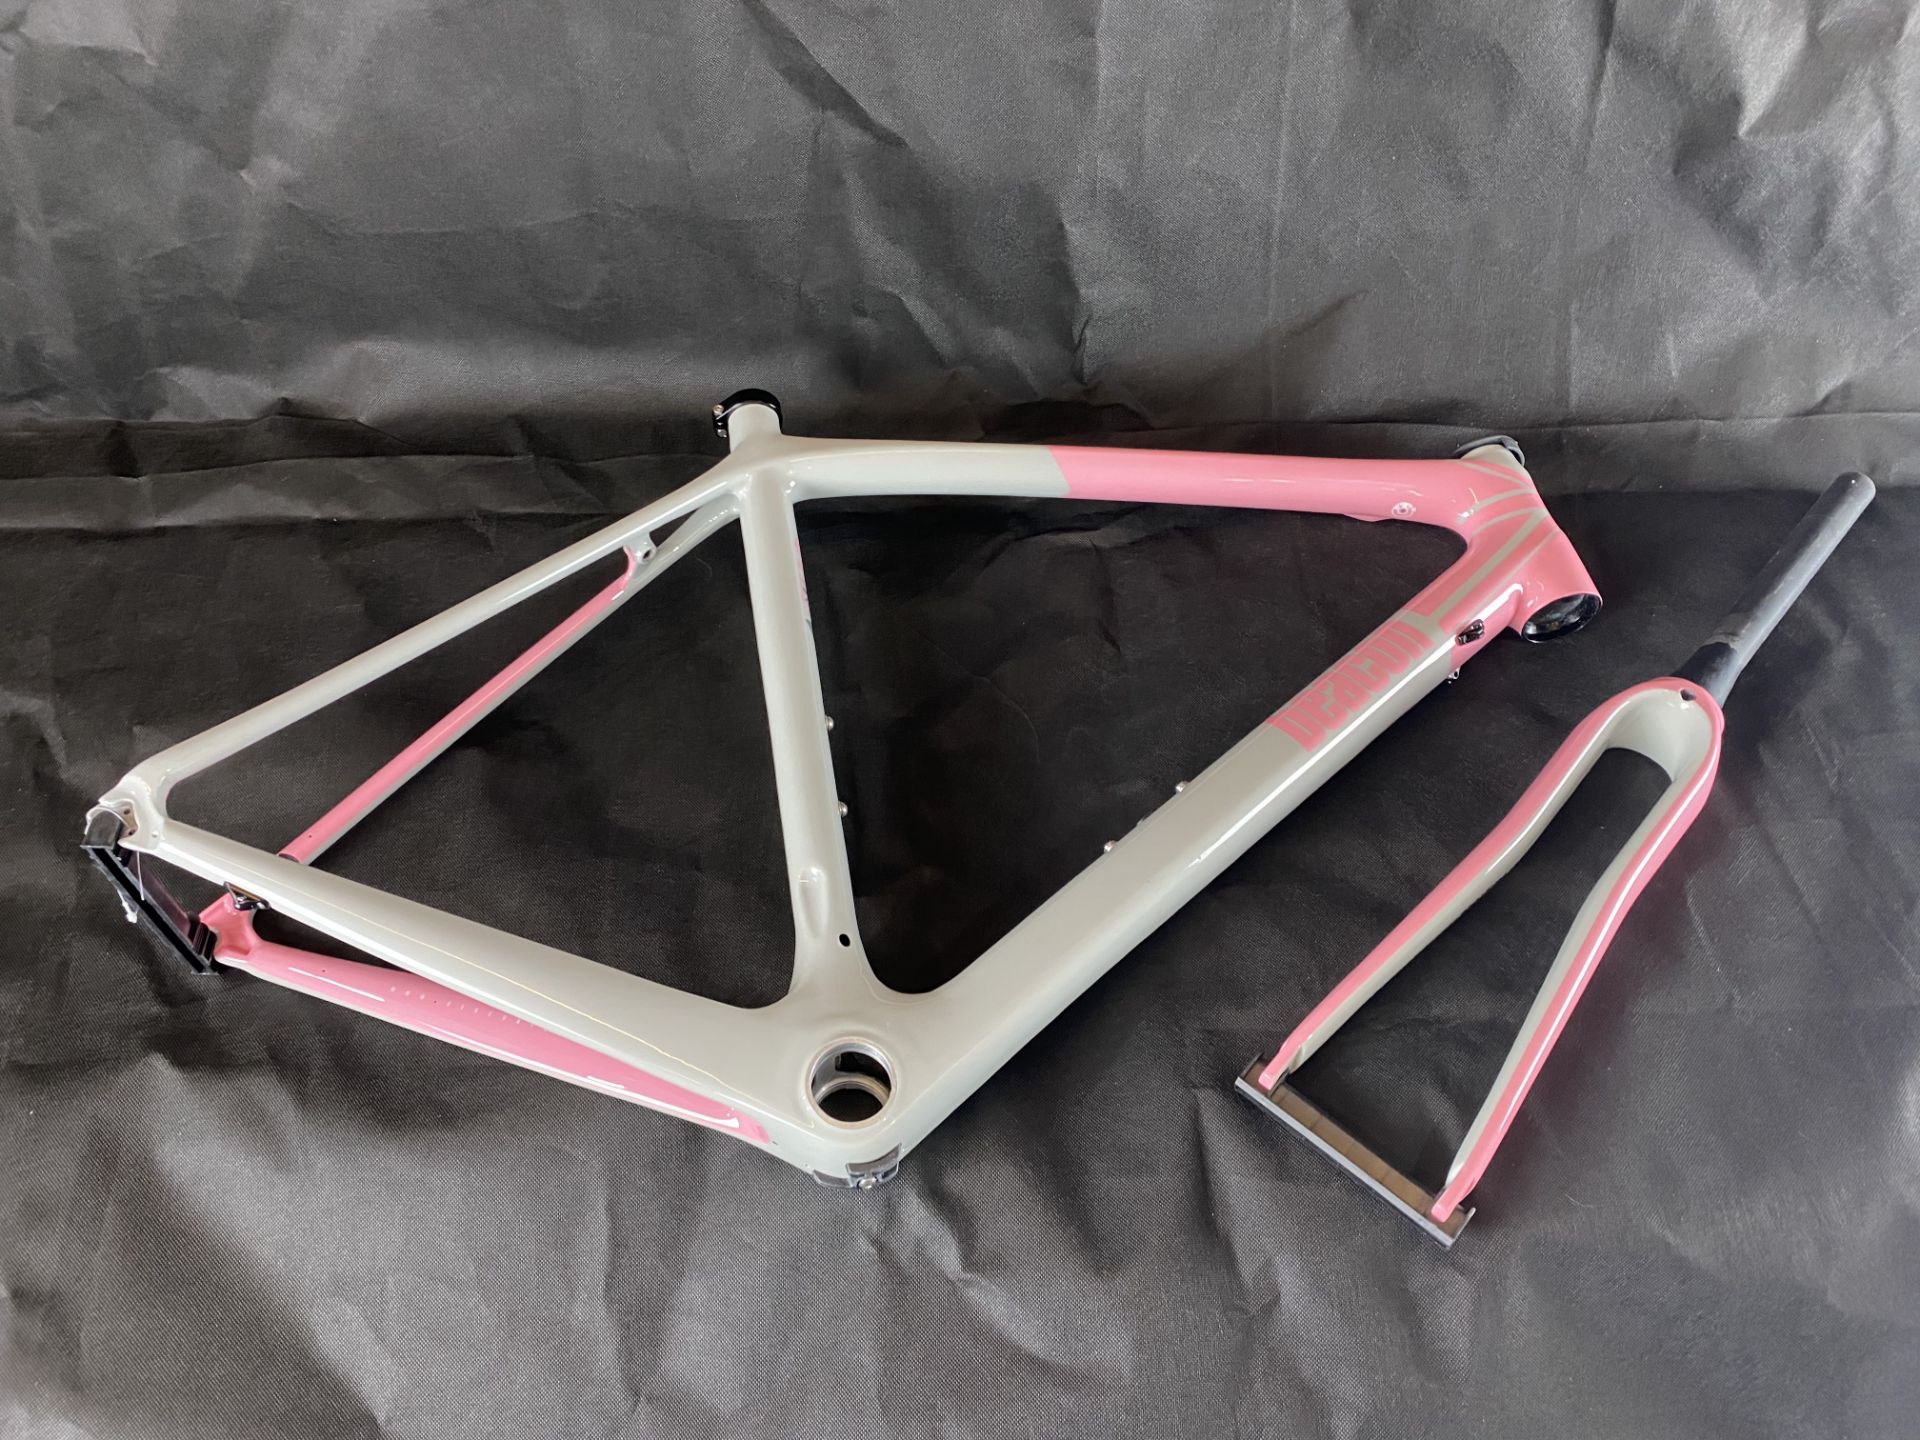 1 x Beacon Model BF-70, Size 590, Carbon Fibre Bike Frame in Light Grey & Pink.